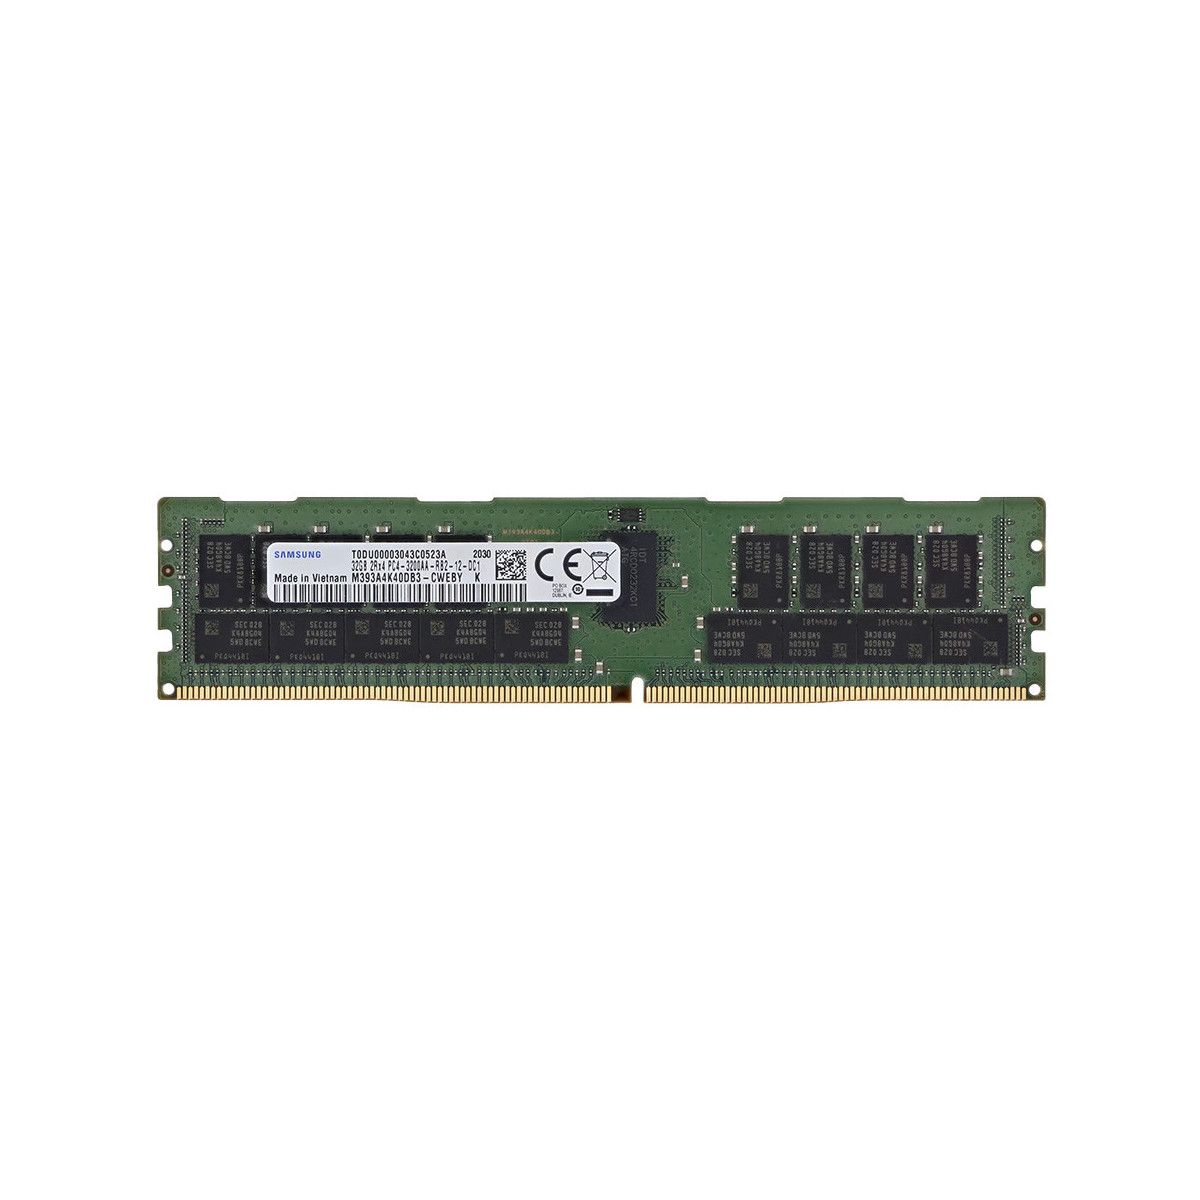 P07646‐K21-MS - Memstar 1x 32GB DDR4-3200 RDIMM PC4-25600R - Mem-star Compatible OEM Memory 1 - Memstar 